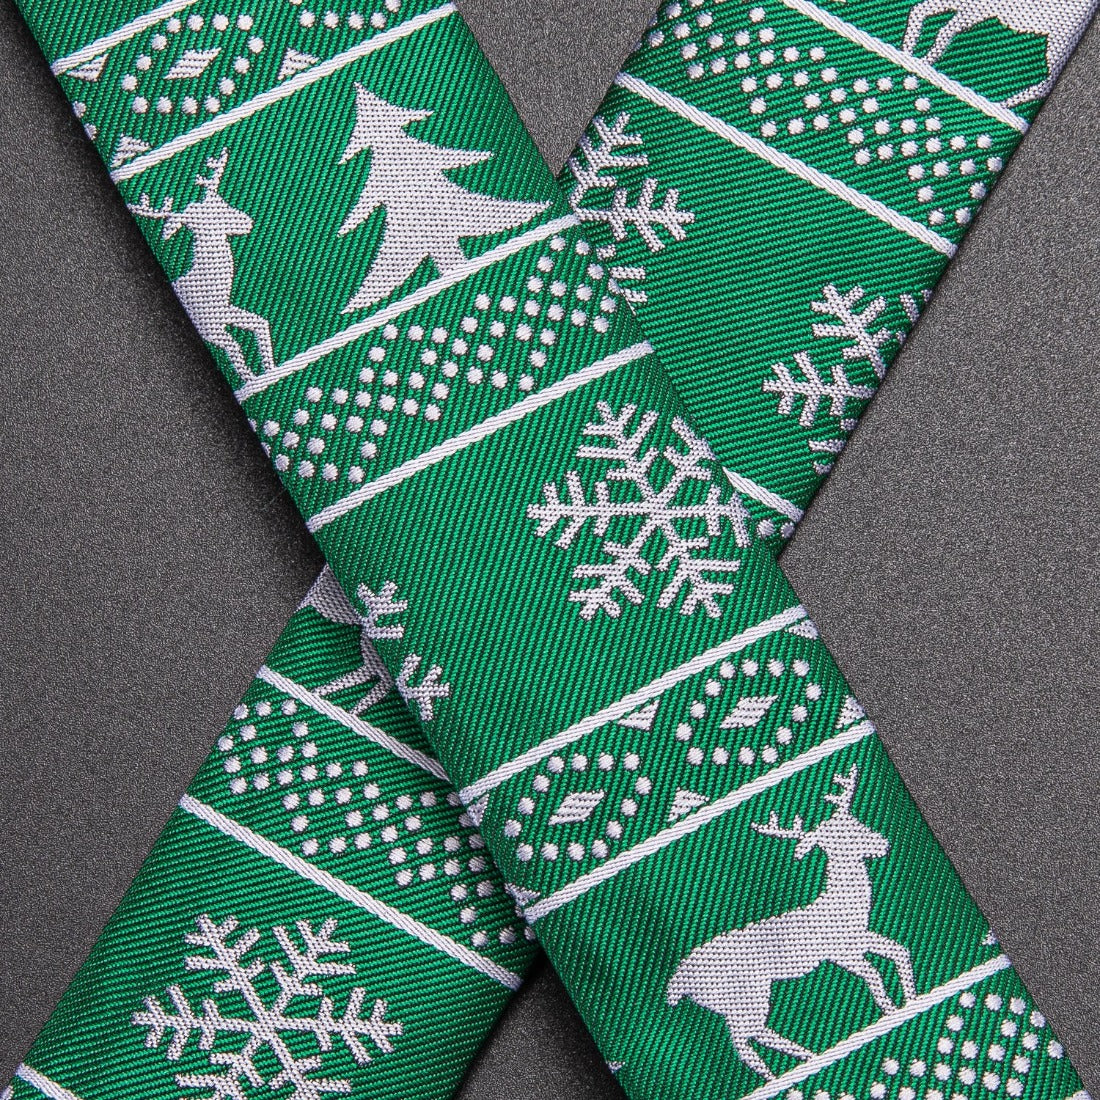 Green Novelty Suspender Bowtie Hanky Cufflinks Set Christmas